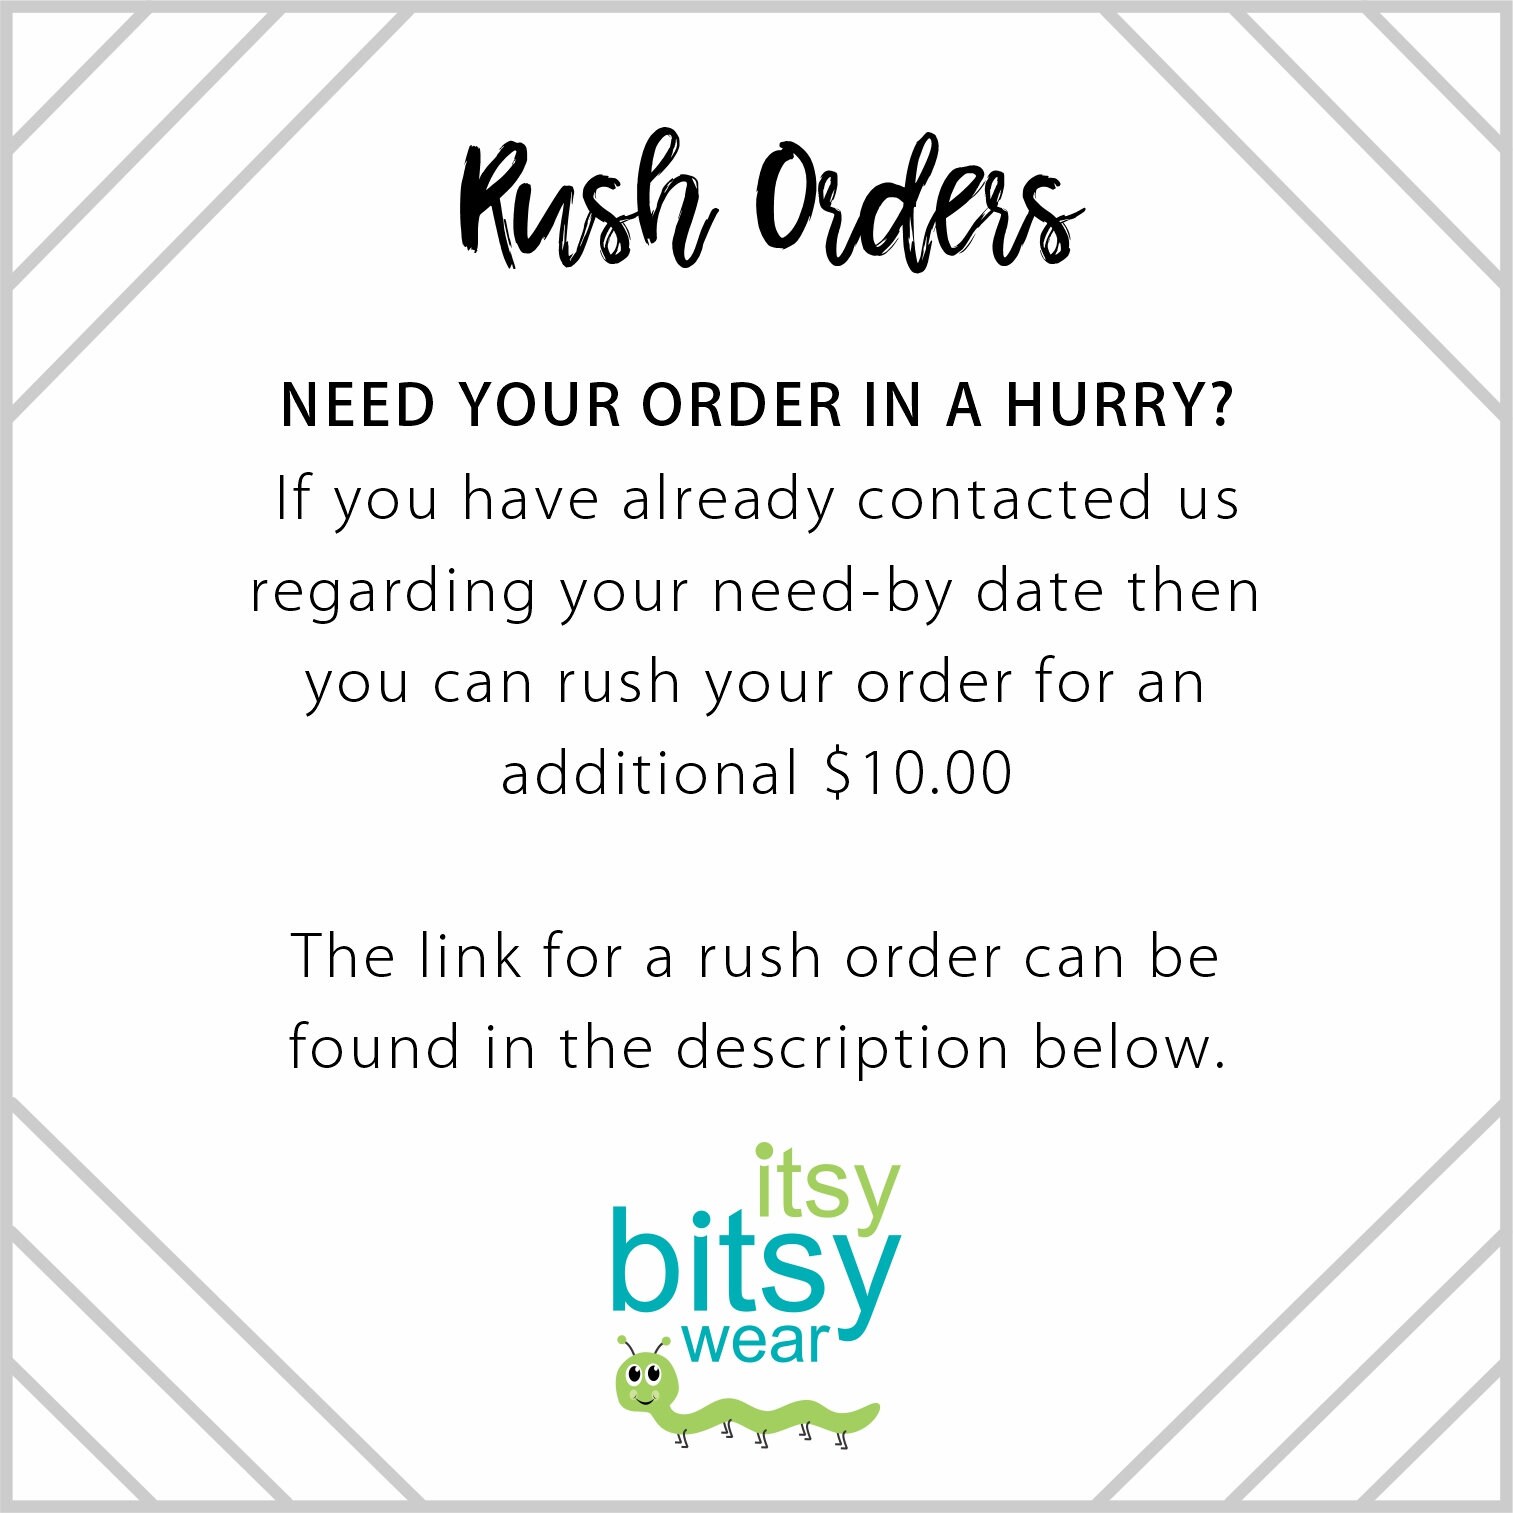 Last Minute Rush Orders - B2BDTG